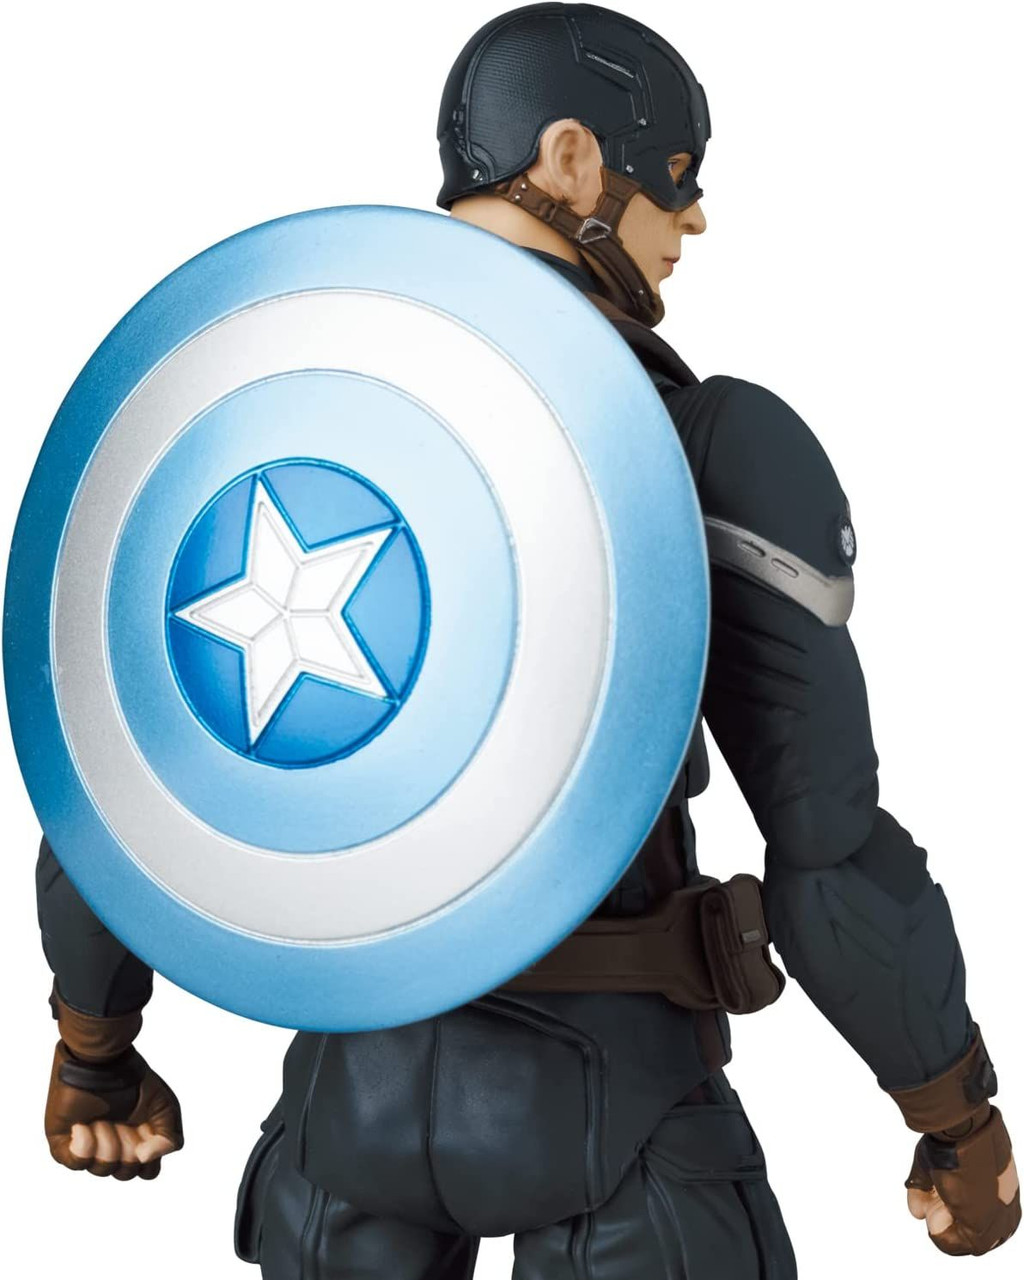 MAFEX Captain America Stealth Suit Figure (Avengers)